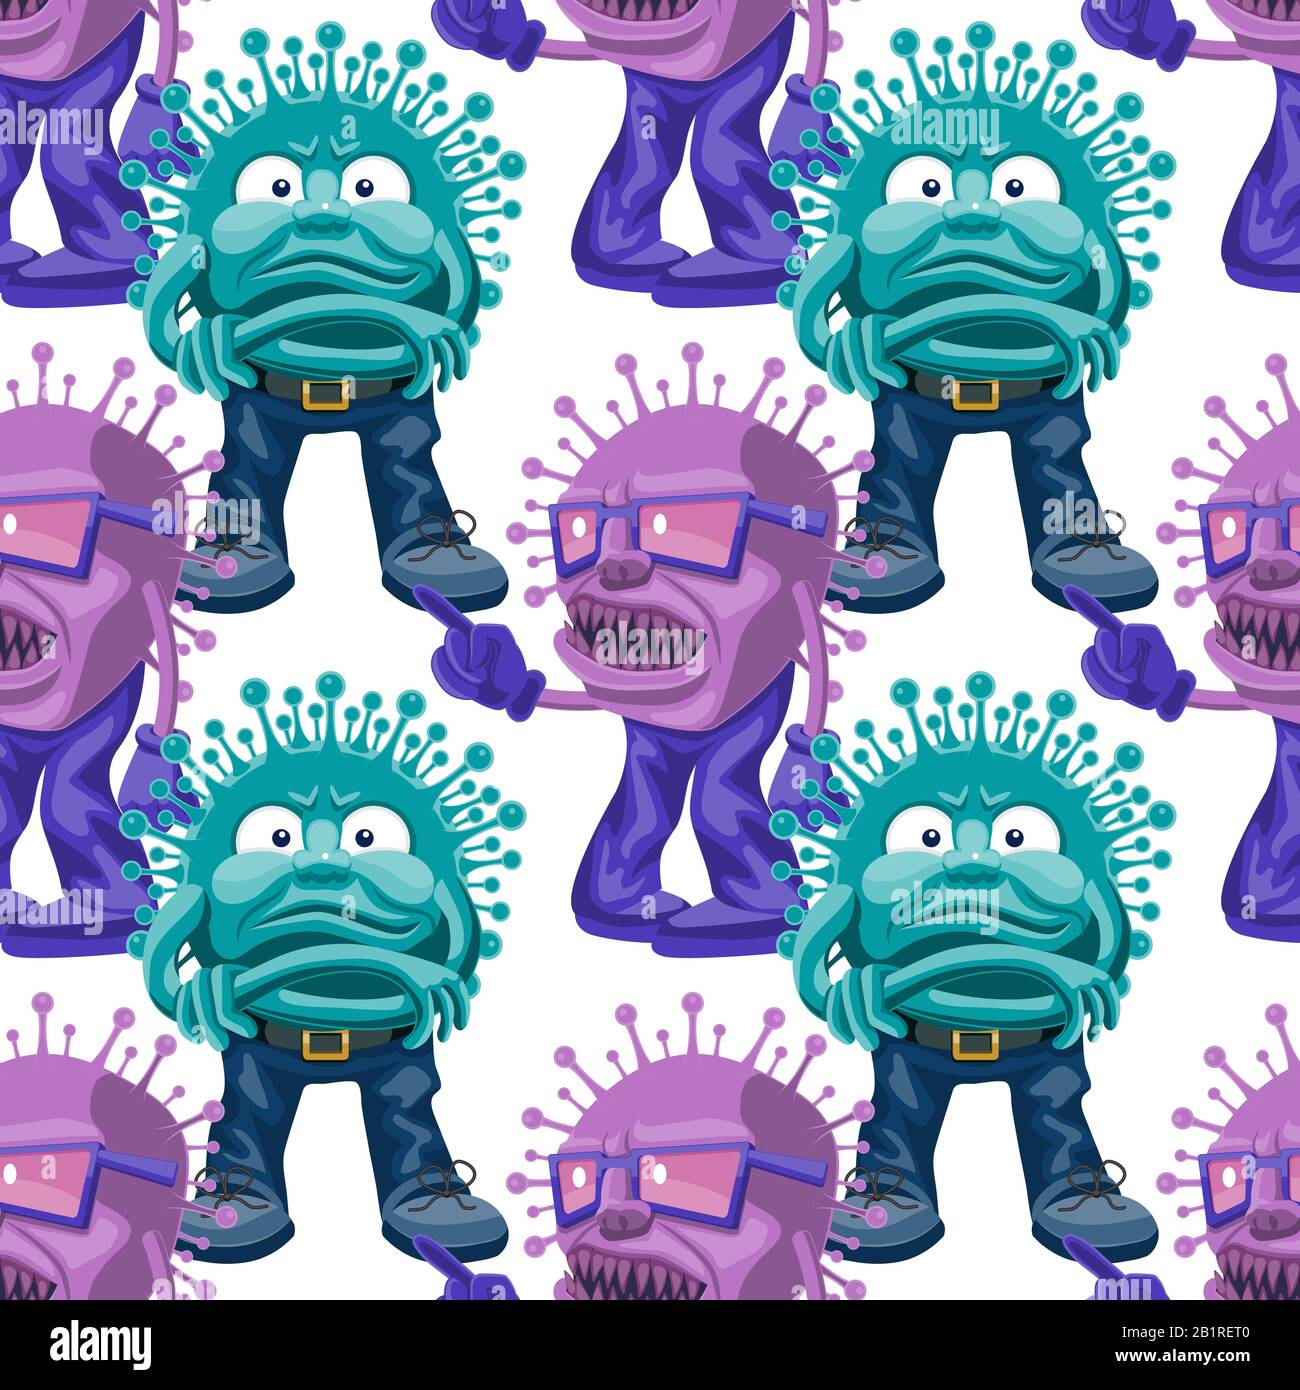 Seamless cartoon virus character pattern on white background. Vector image Stock Vector